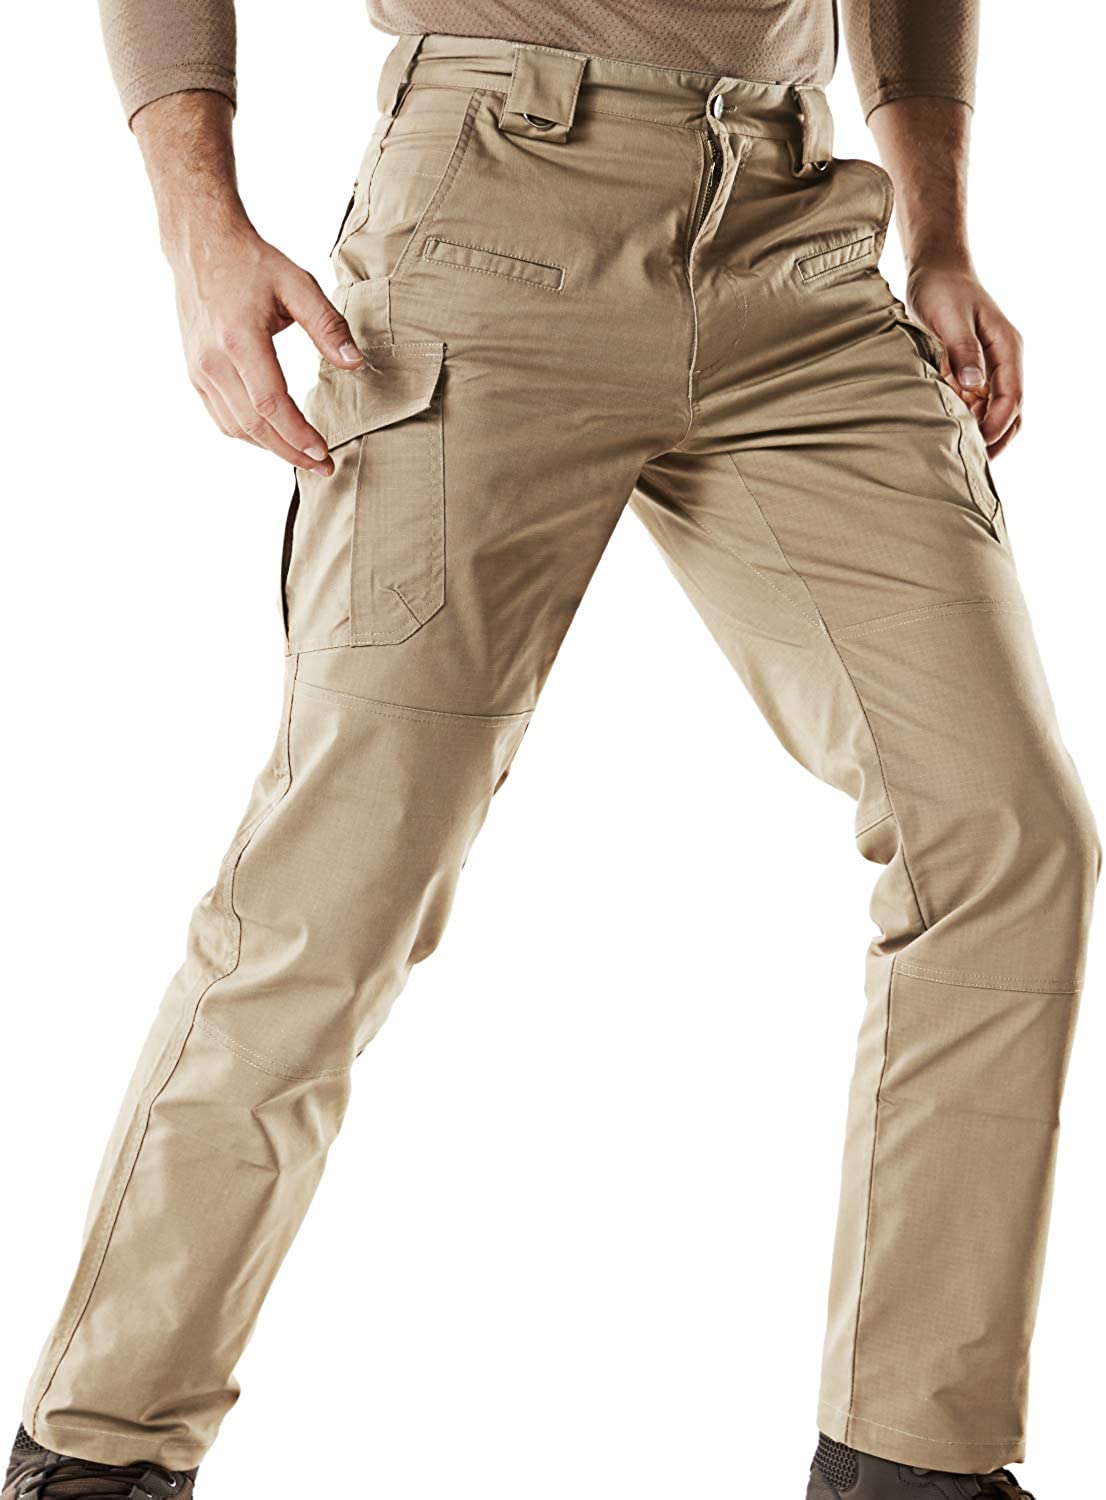 CQR Mens Flex Stretch Tactical Work Outdoor Operator Rip-Stop Trouser Pants EDC 